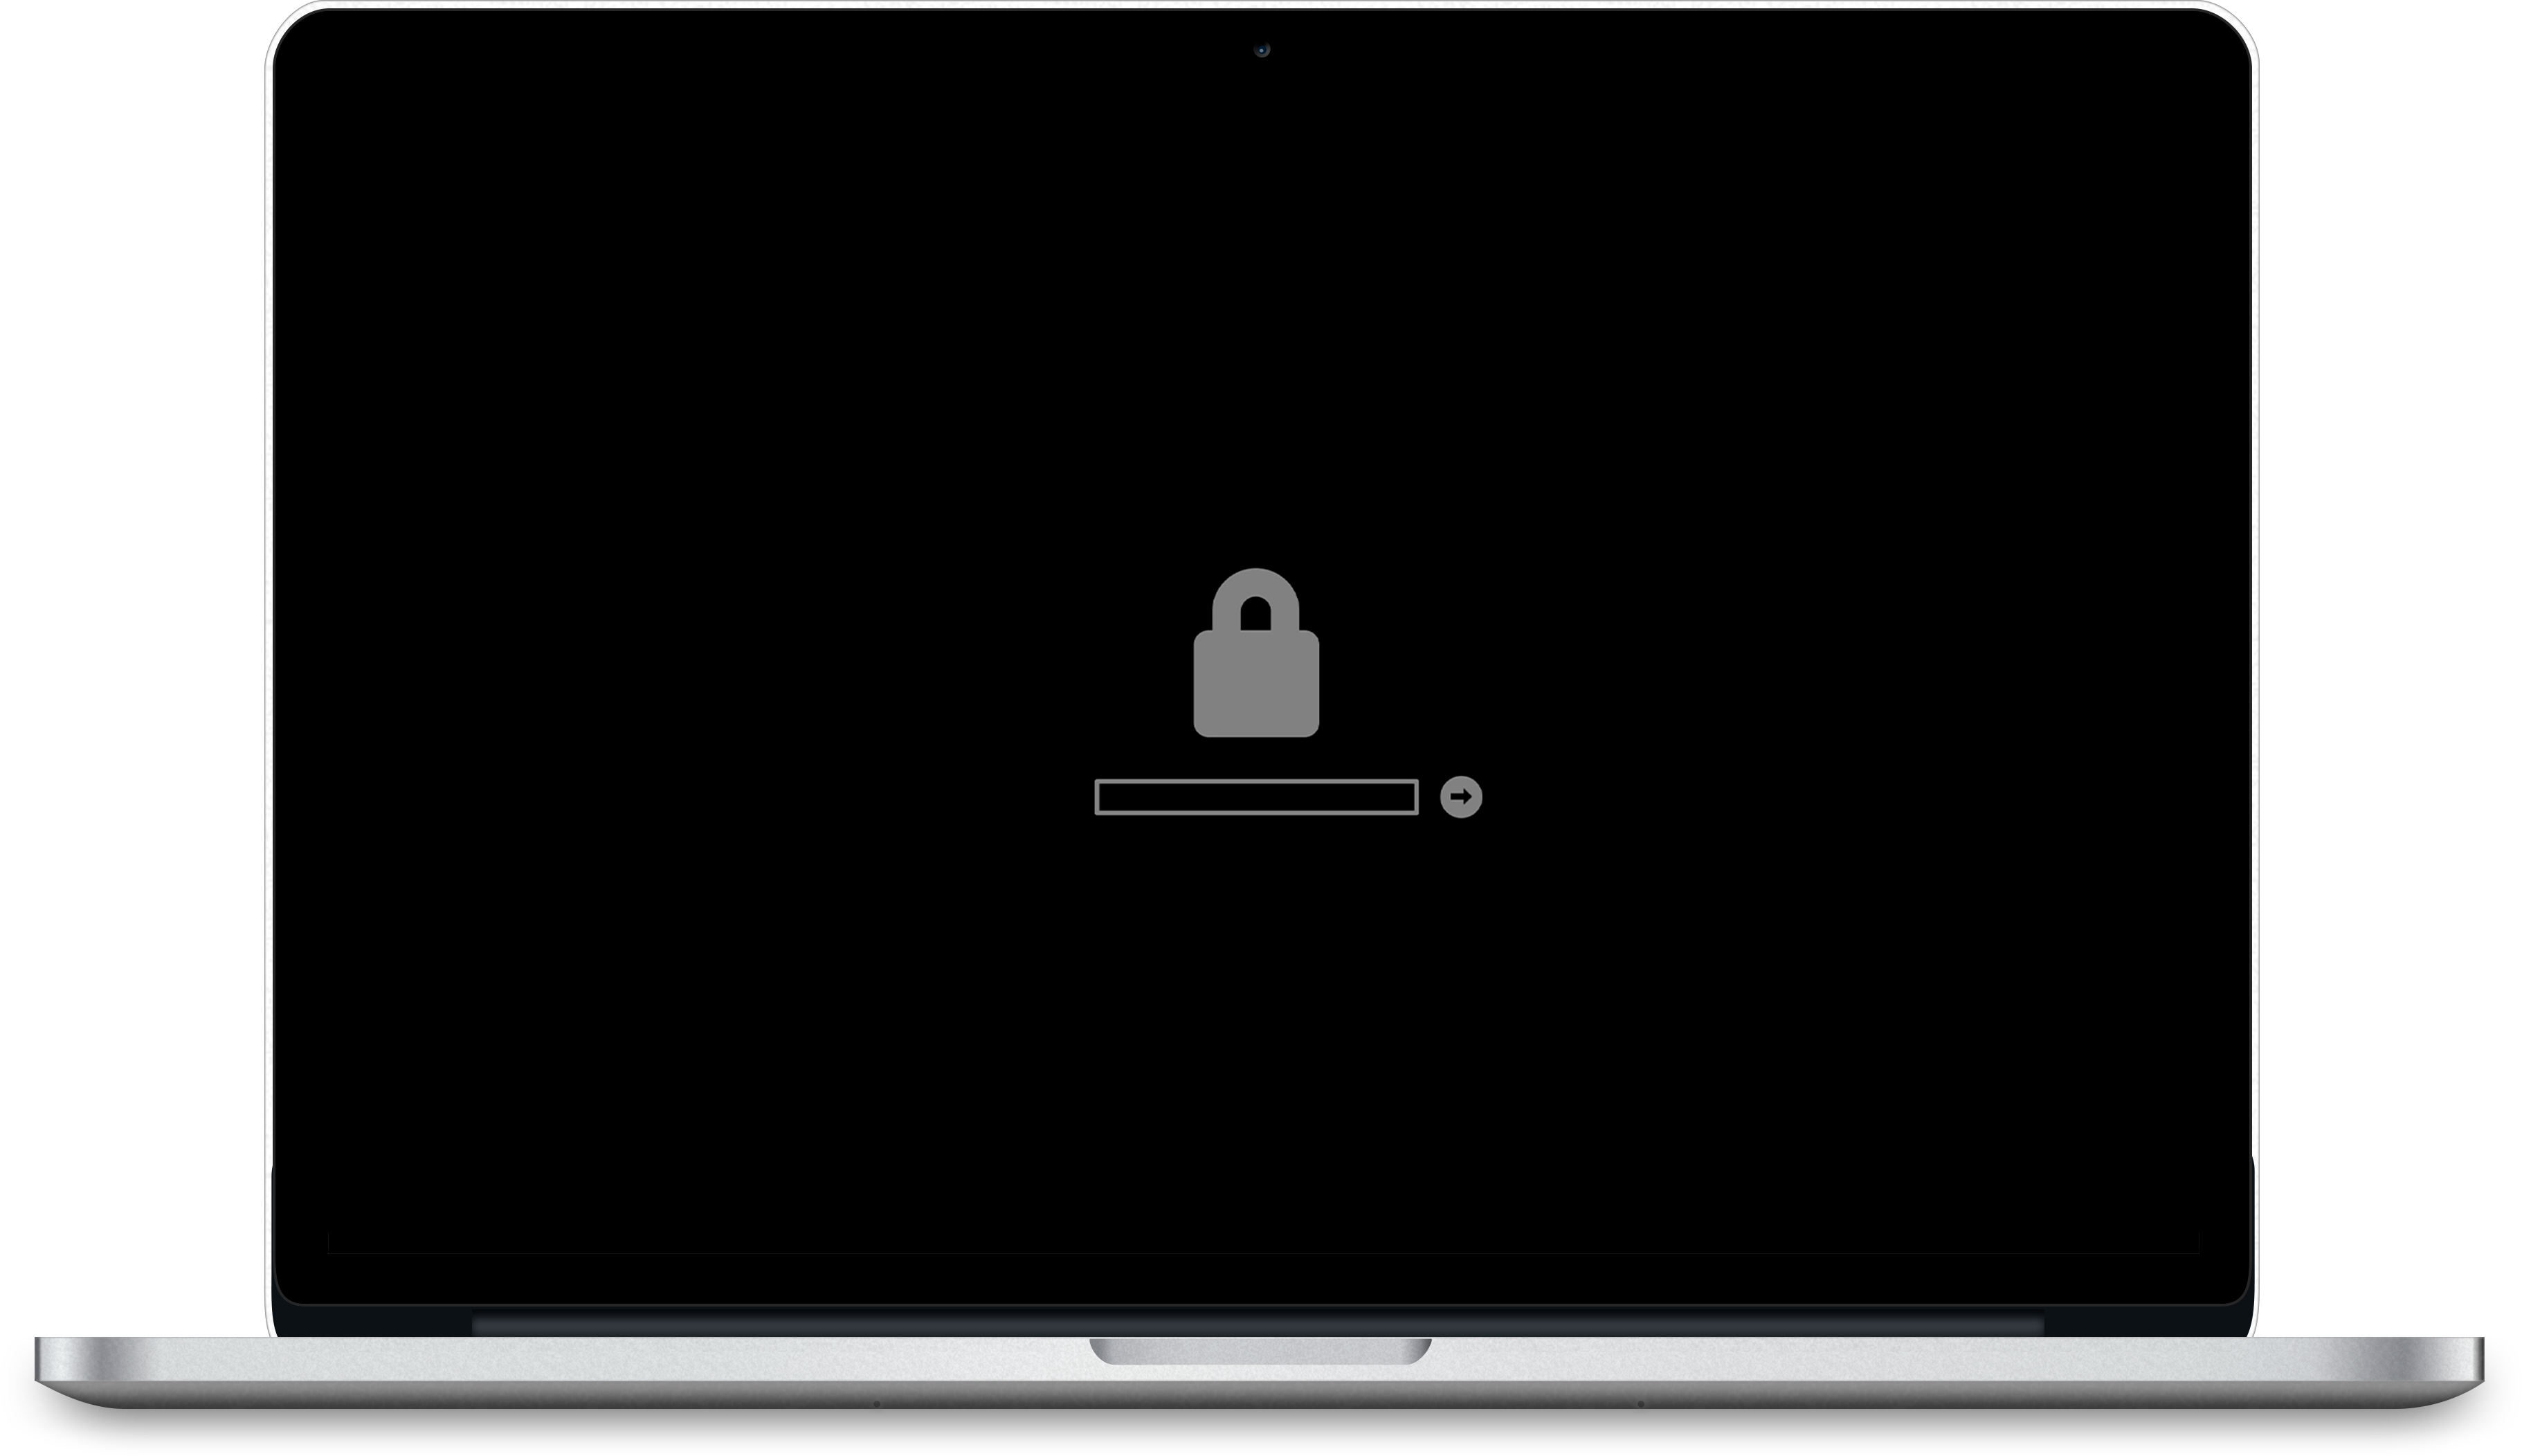 Mac EFI unlock Checkm8 Software